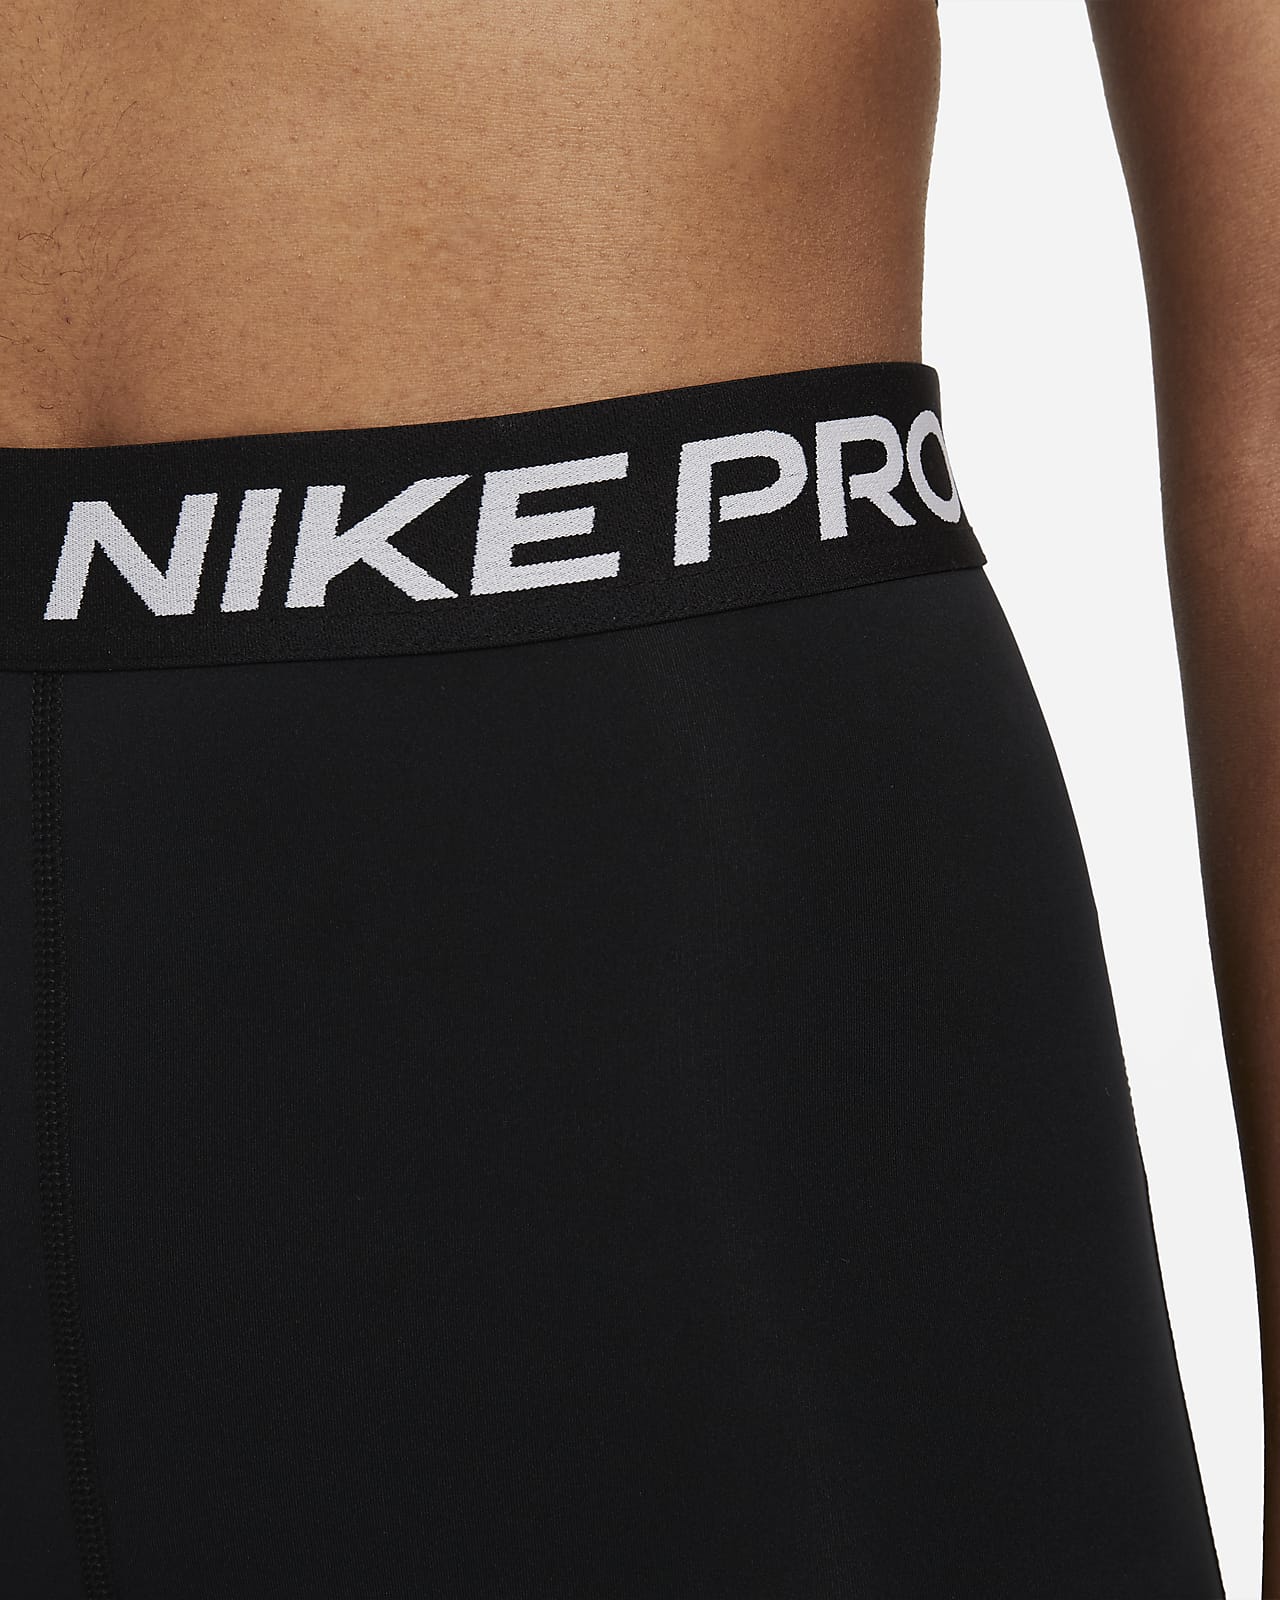 Nike Pro High Rise 7/8 Leggings Women's Black Red DA0570-010 Gym Yoga SMALL  $55 